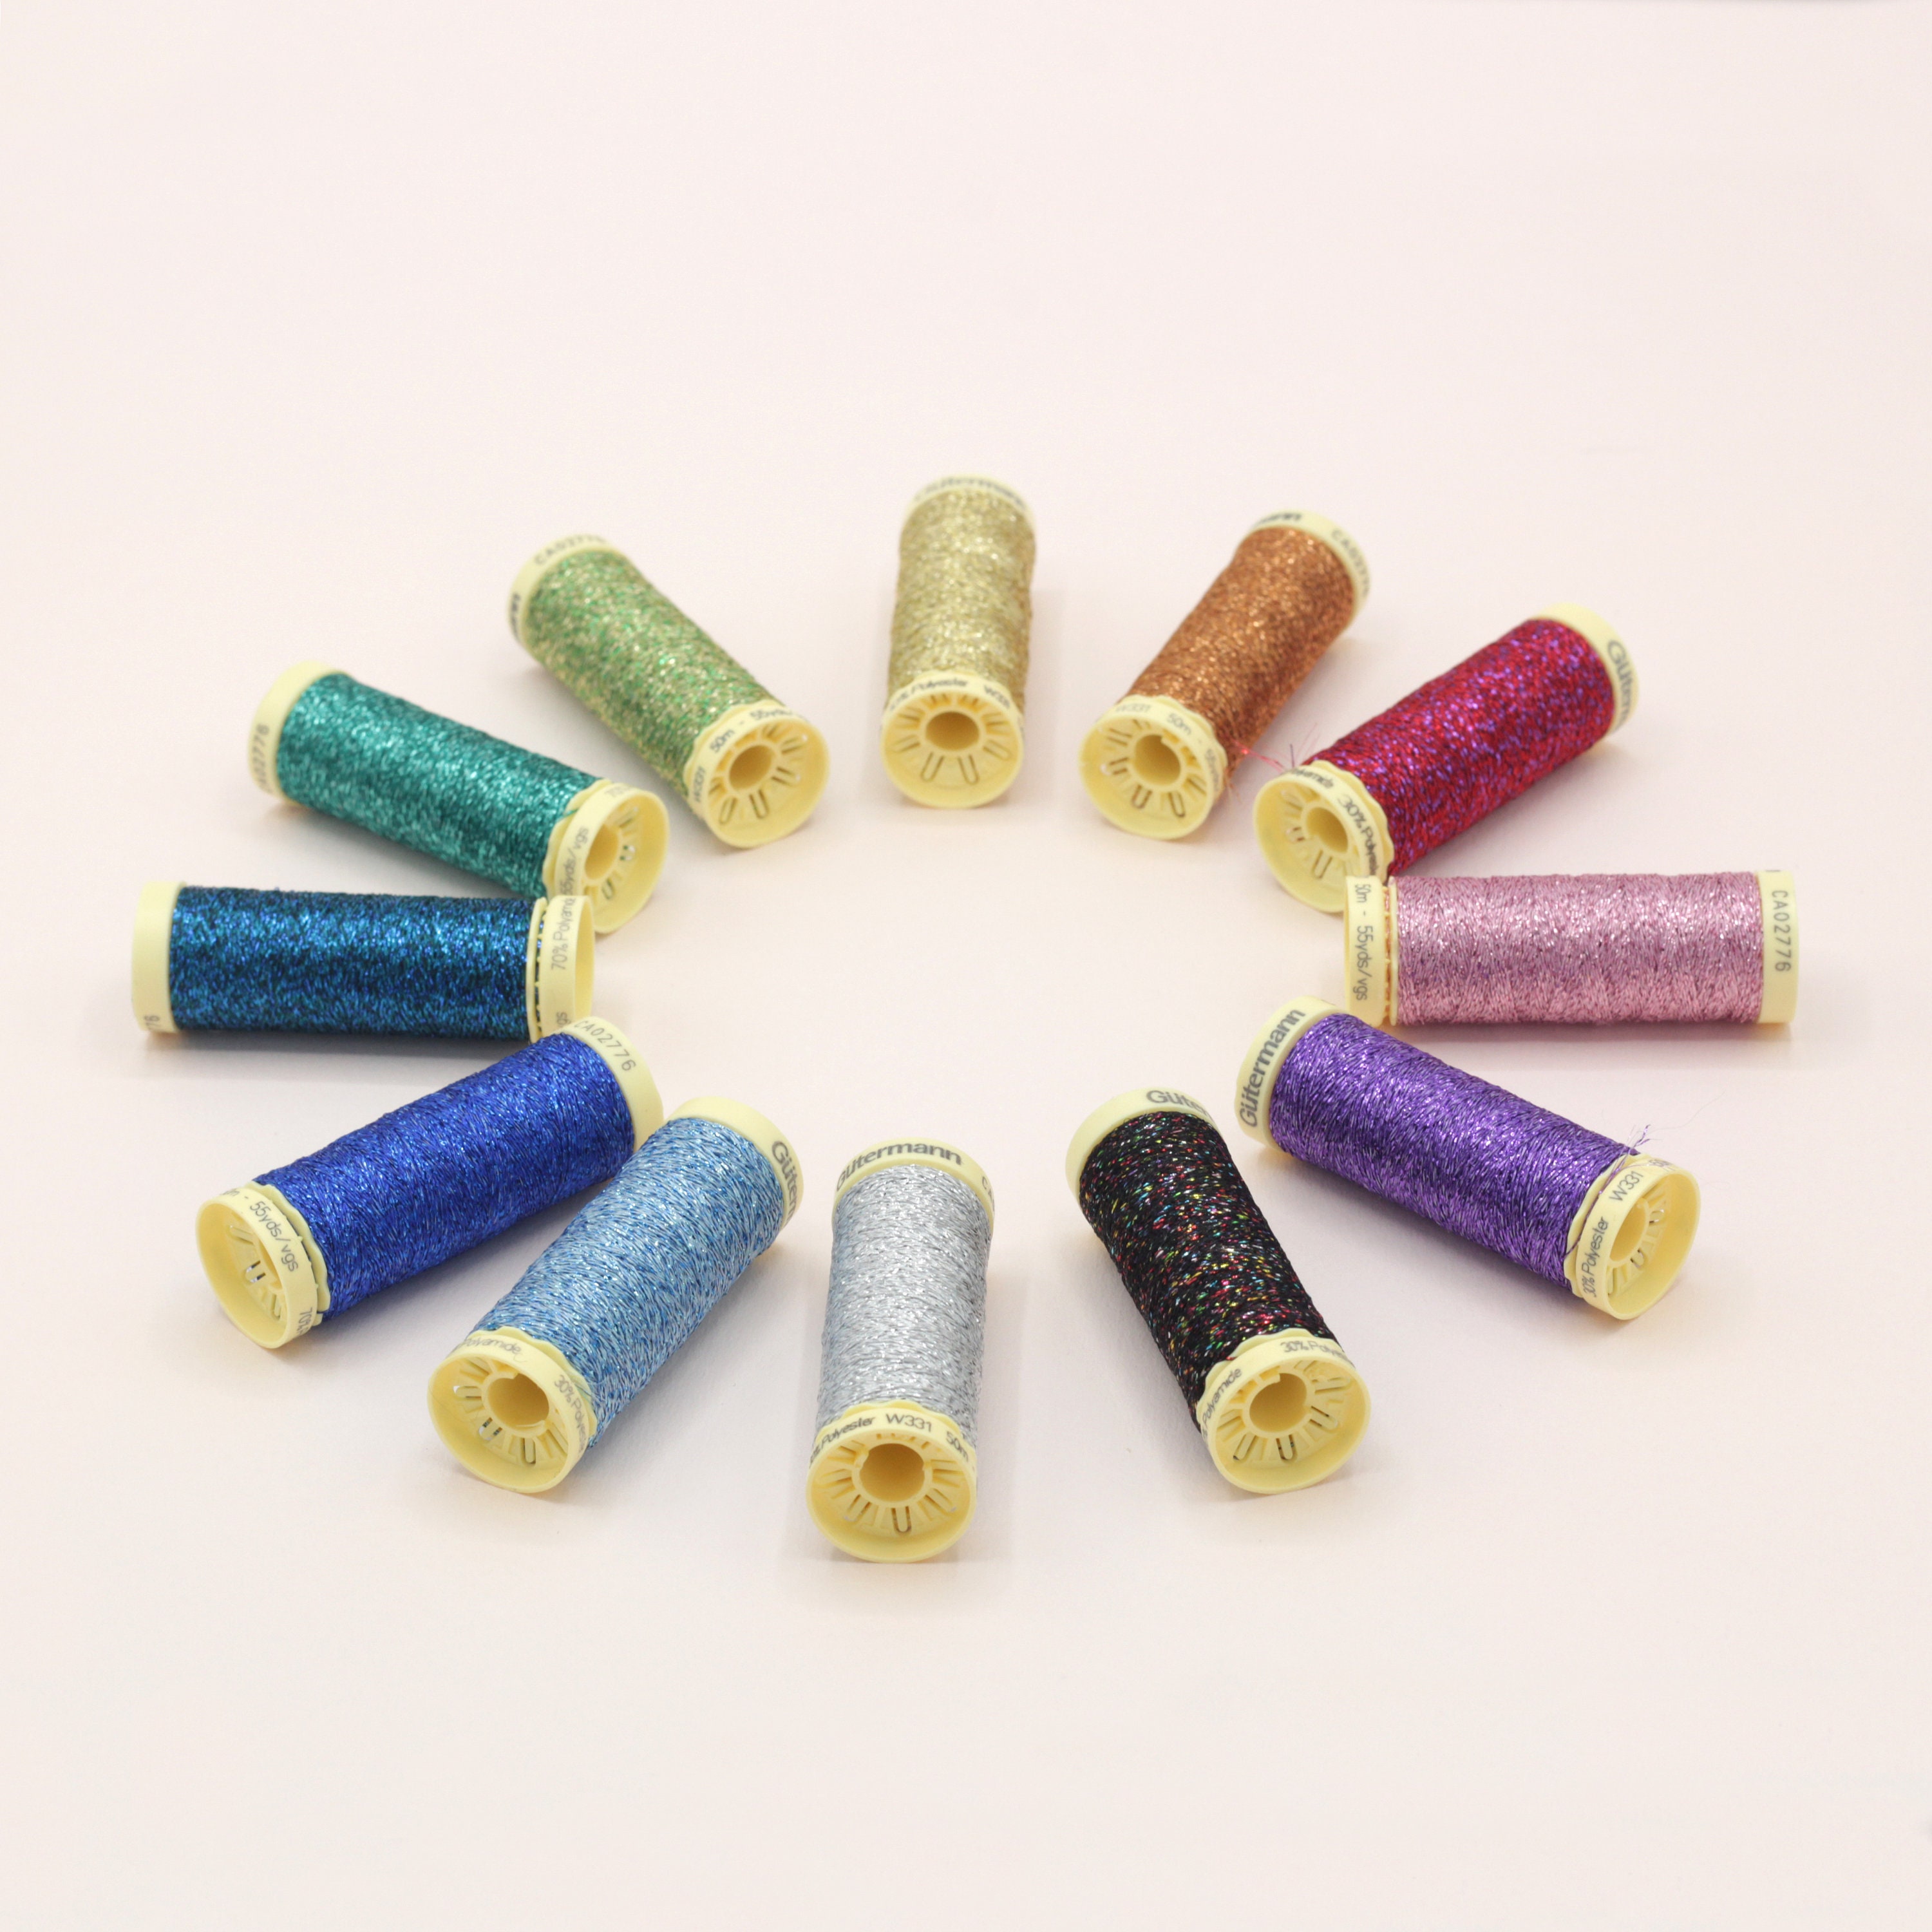 Metallic Embroidery Floss, Thread, Metallic Cross Stitch Thread